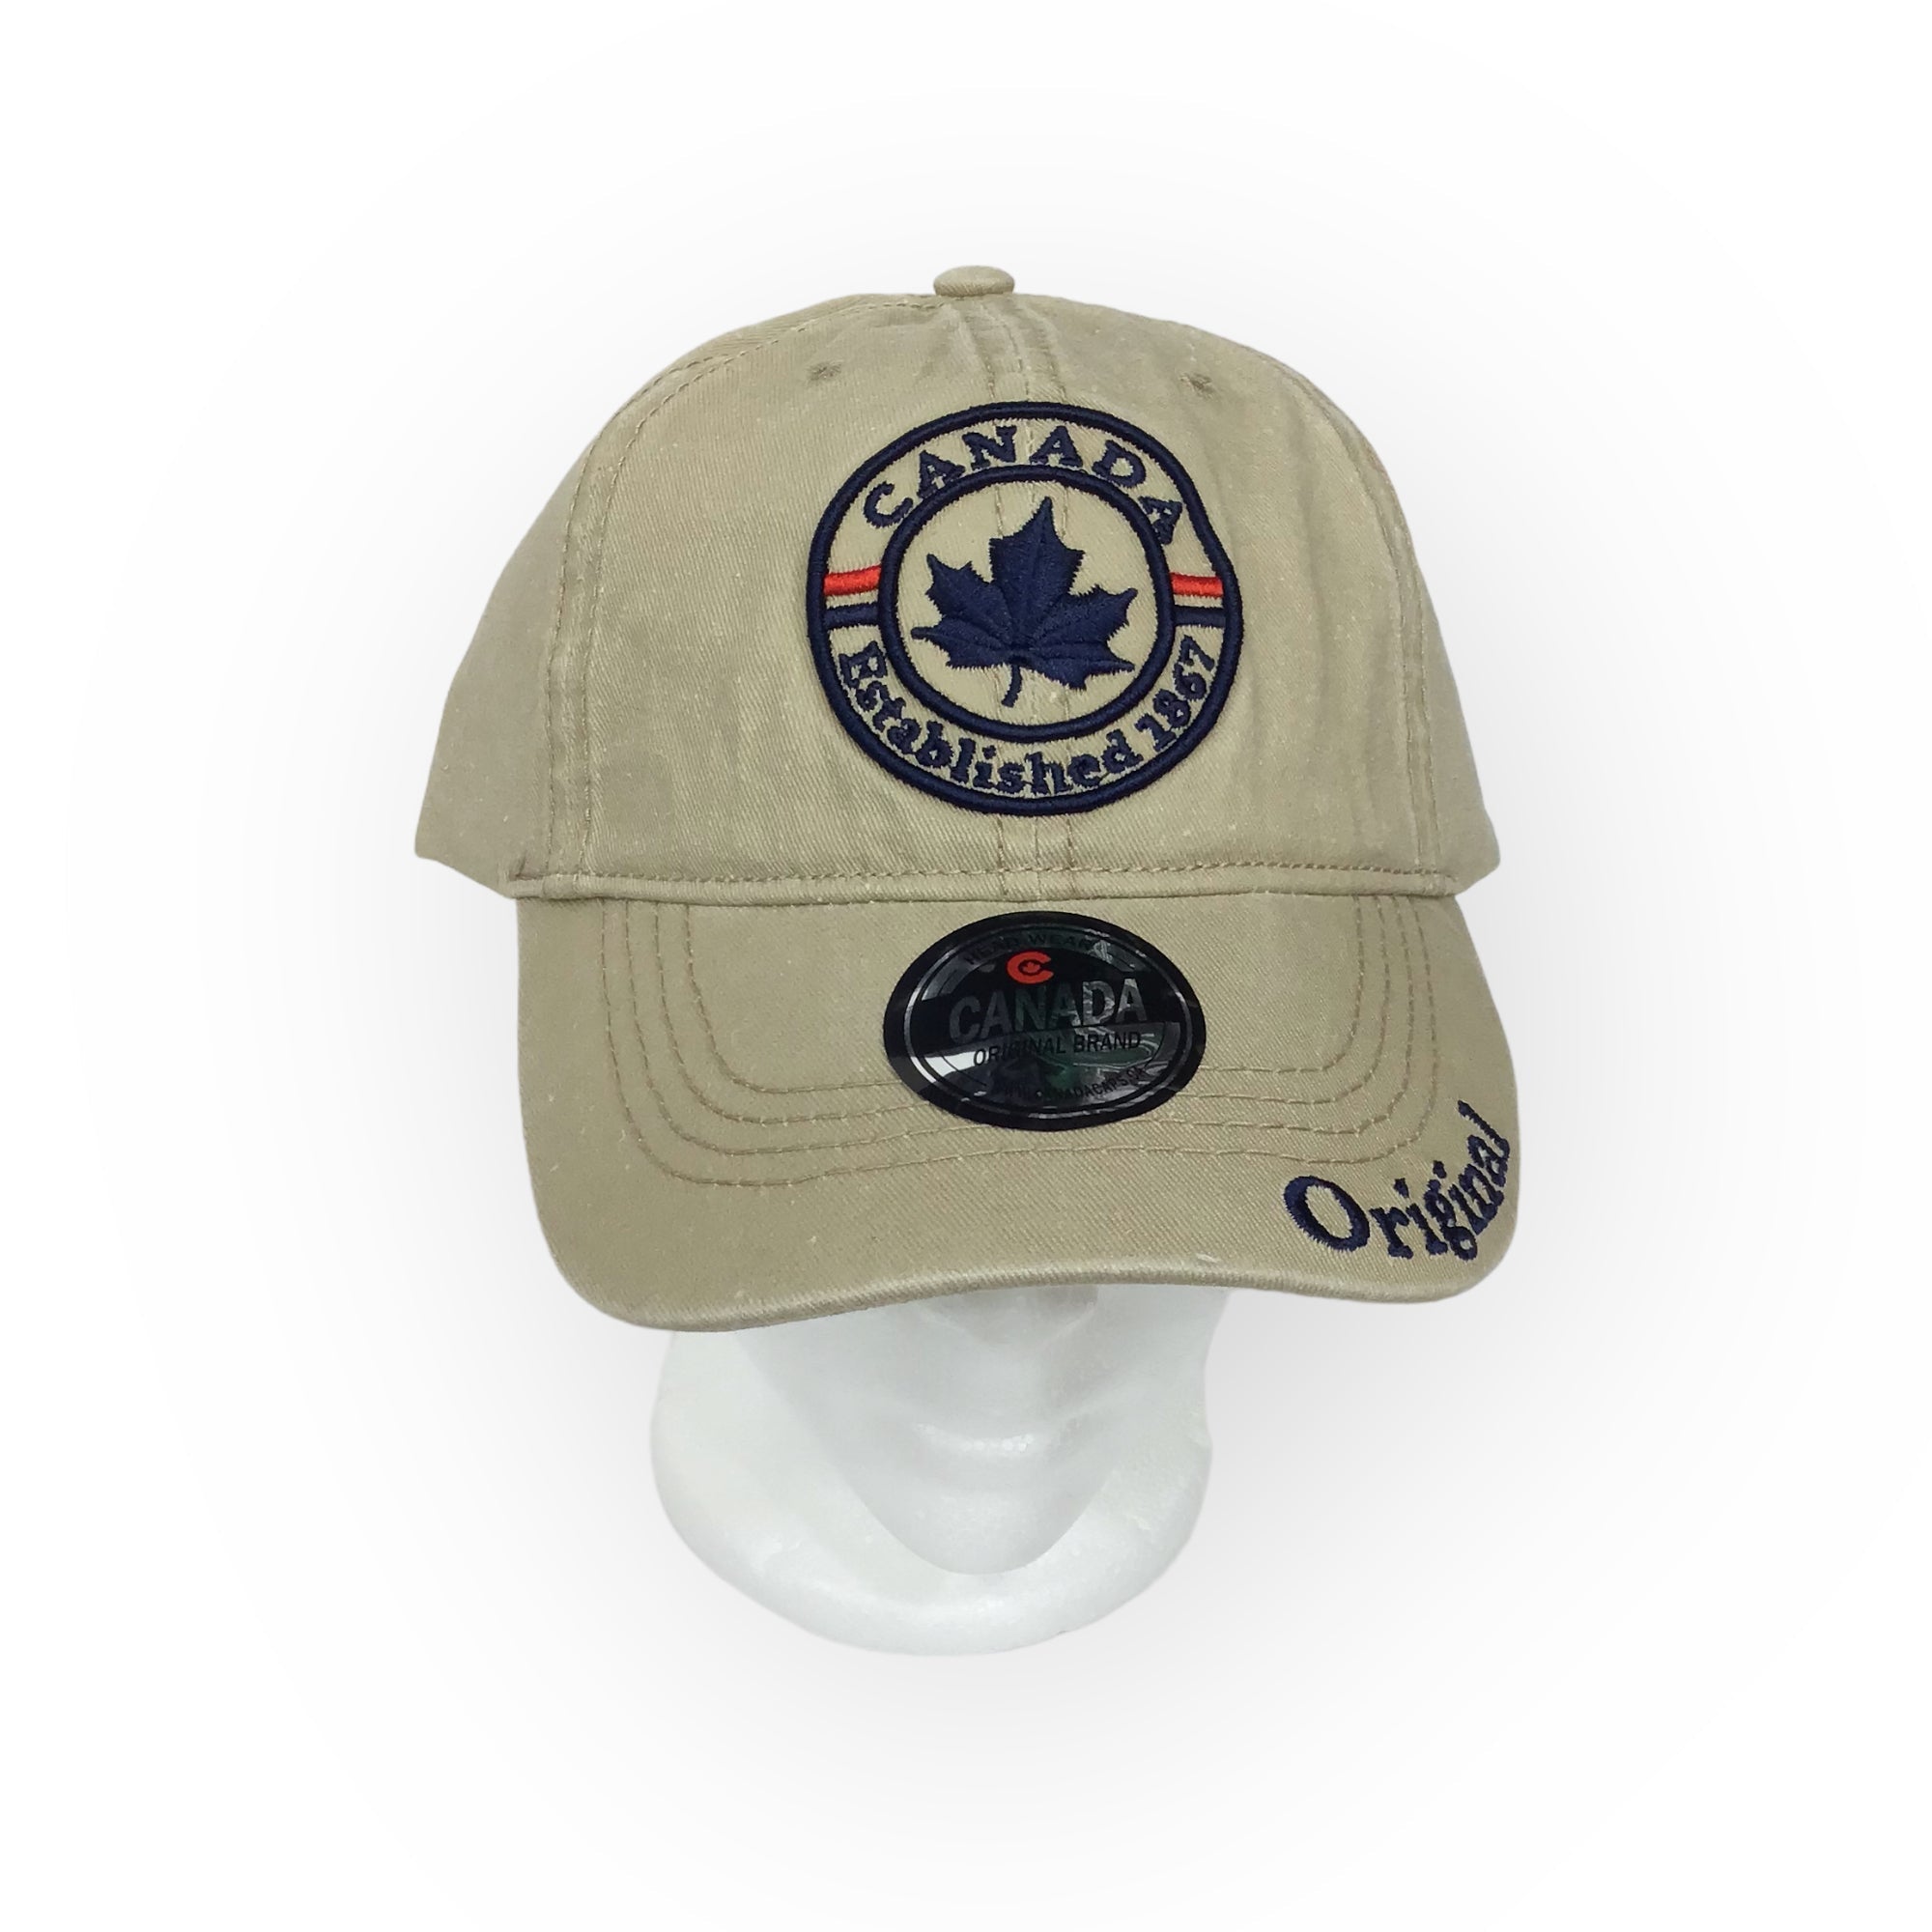 MAPLE LEAF THEME BASEBALL CAP ADJUSTABLE CANADA HAT